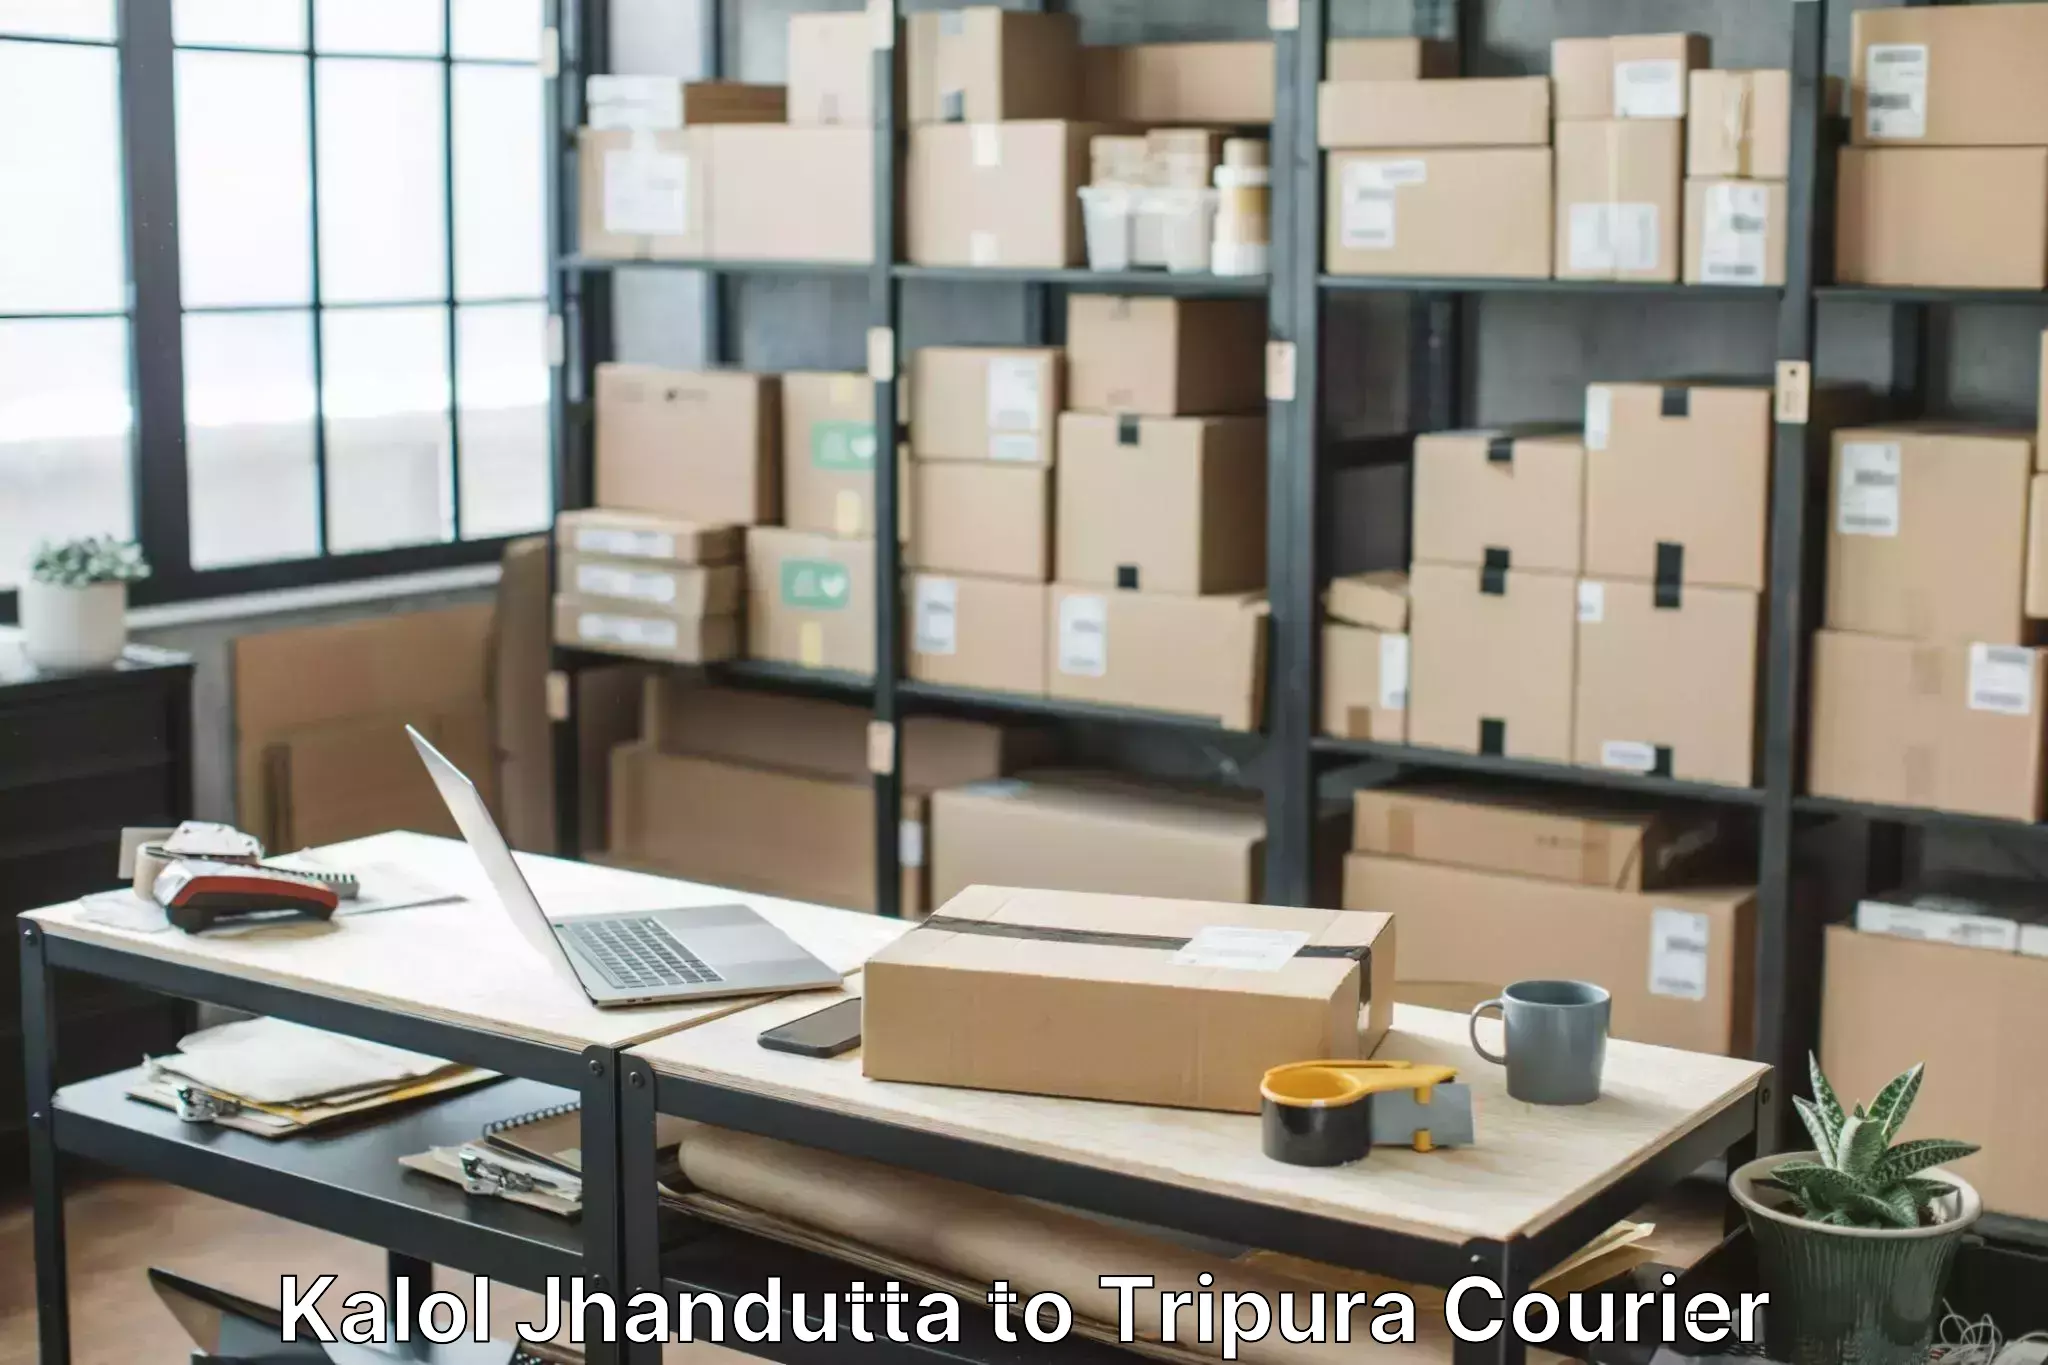 Trusted moving company Kalol Jhandutta to Udaipur Tripura